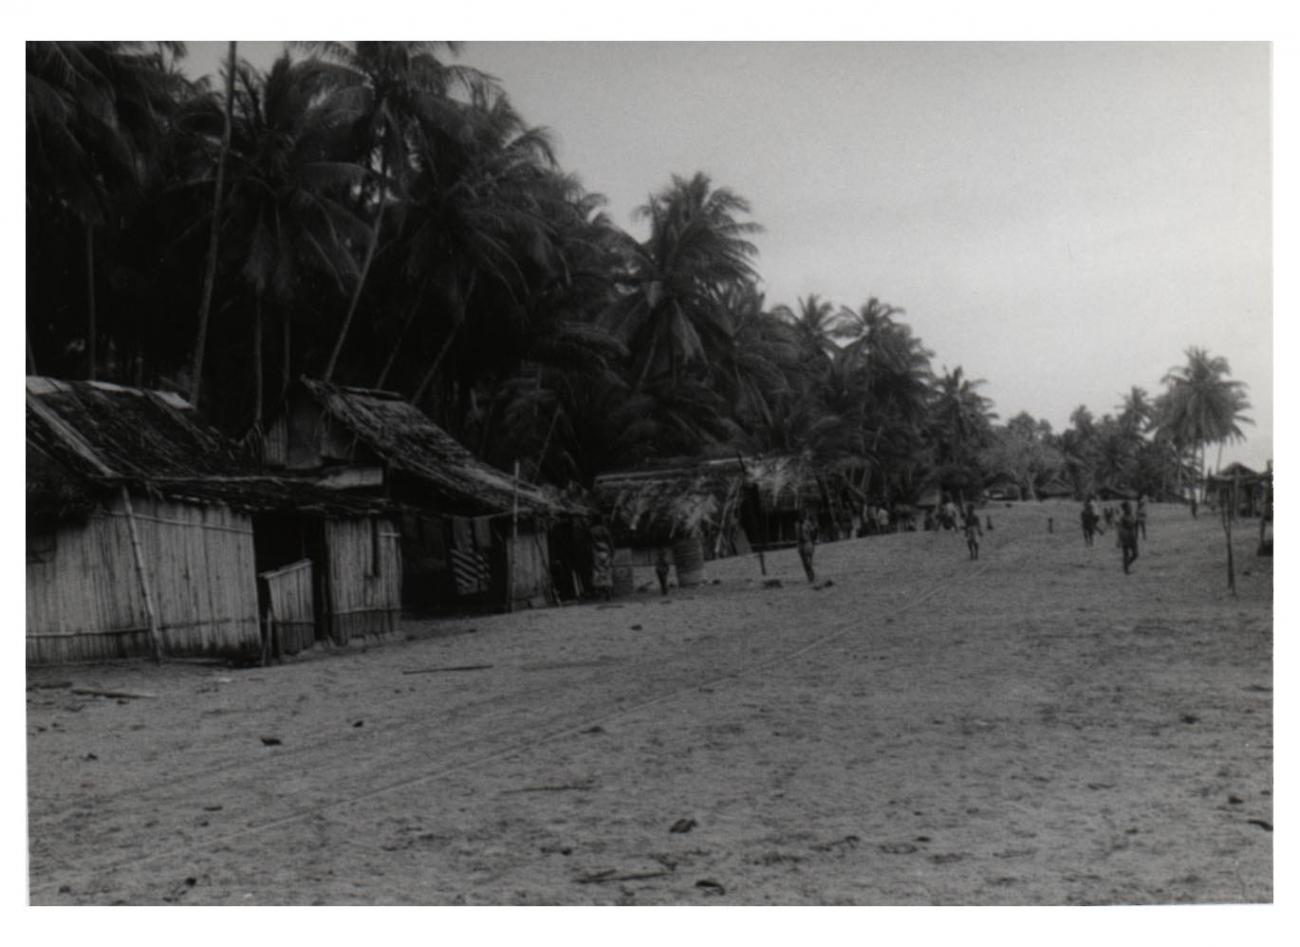 BD/54/33 - 
Kampong Kompol I, Merauke 
